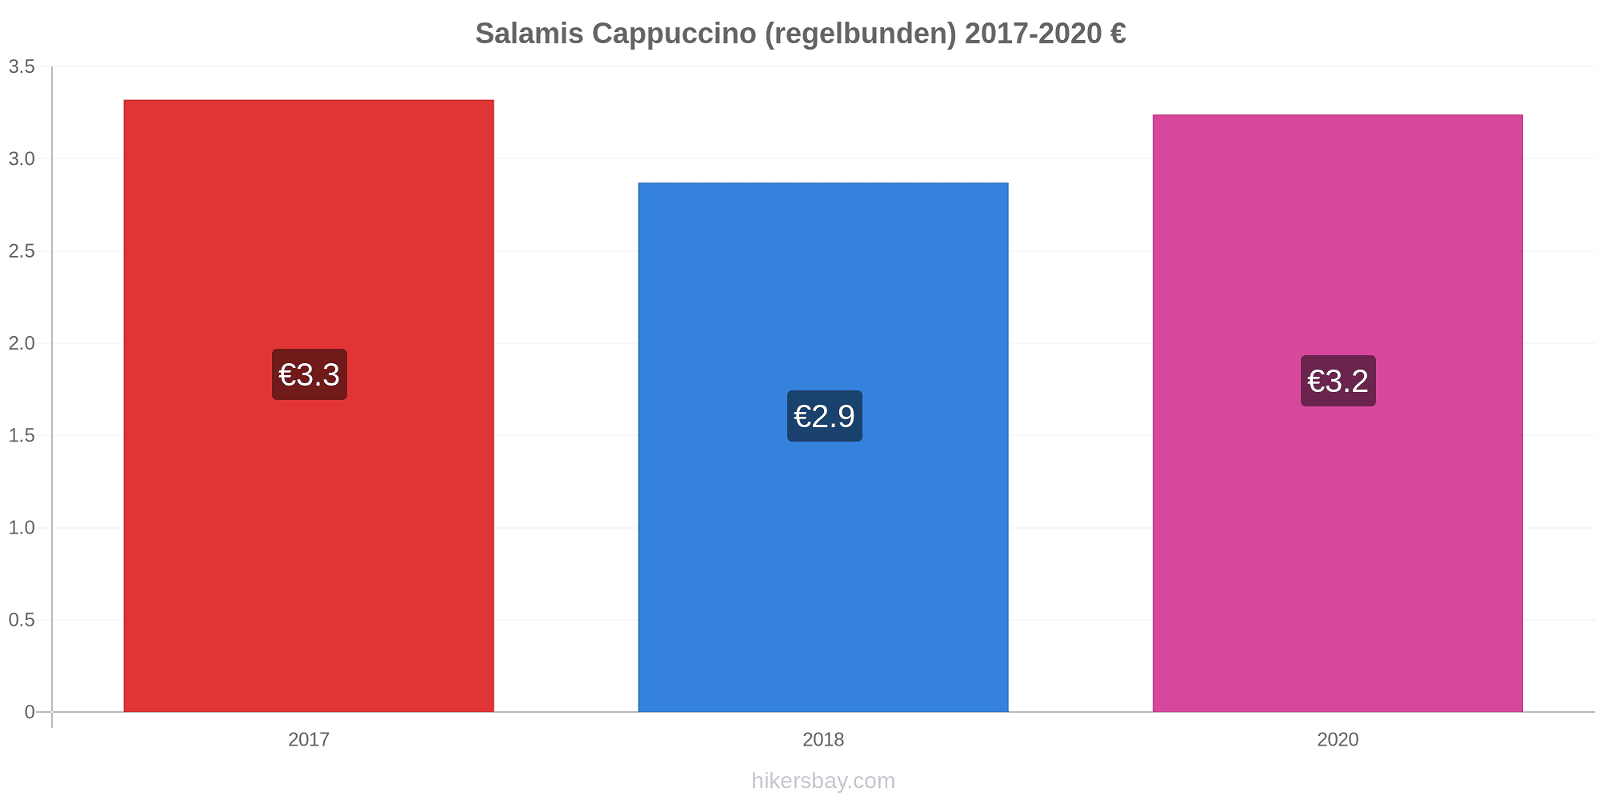 Salamis prisförändringar Cappuccino (regelbunden) hikersbay.com